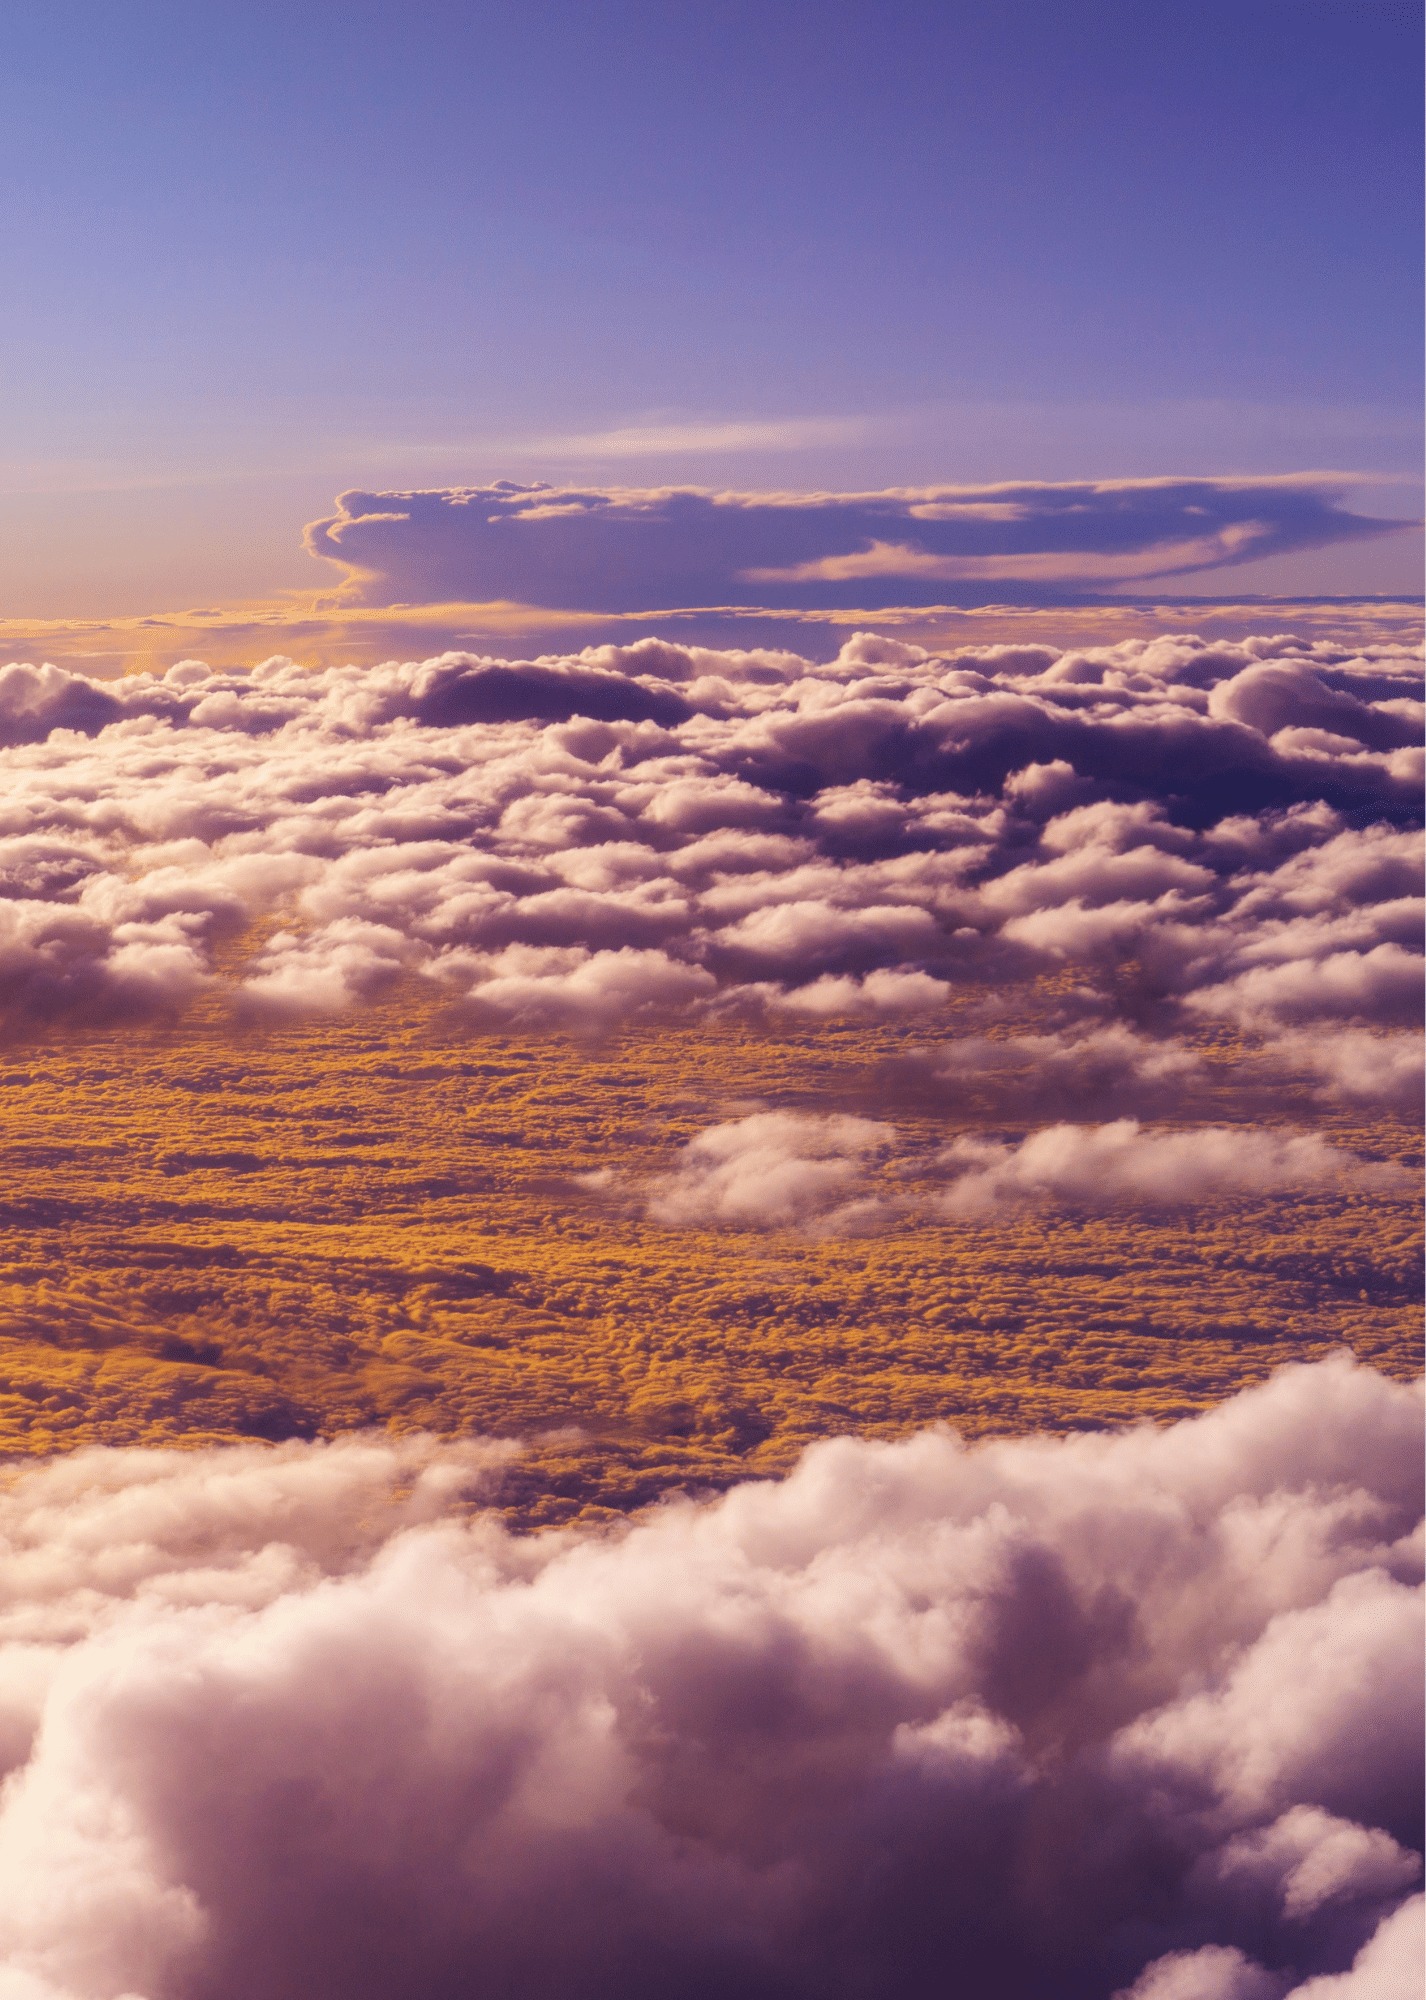 The Cloud landscape and background for Shelley's Poem Mindful Soul Center magazine